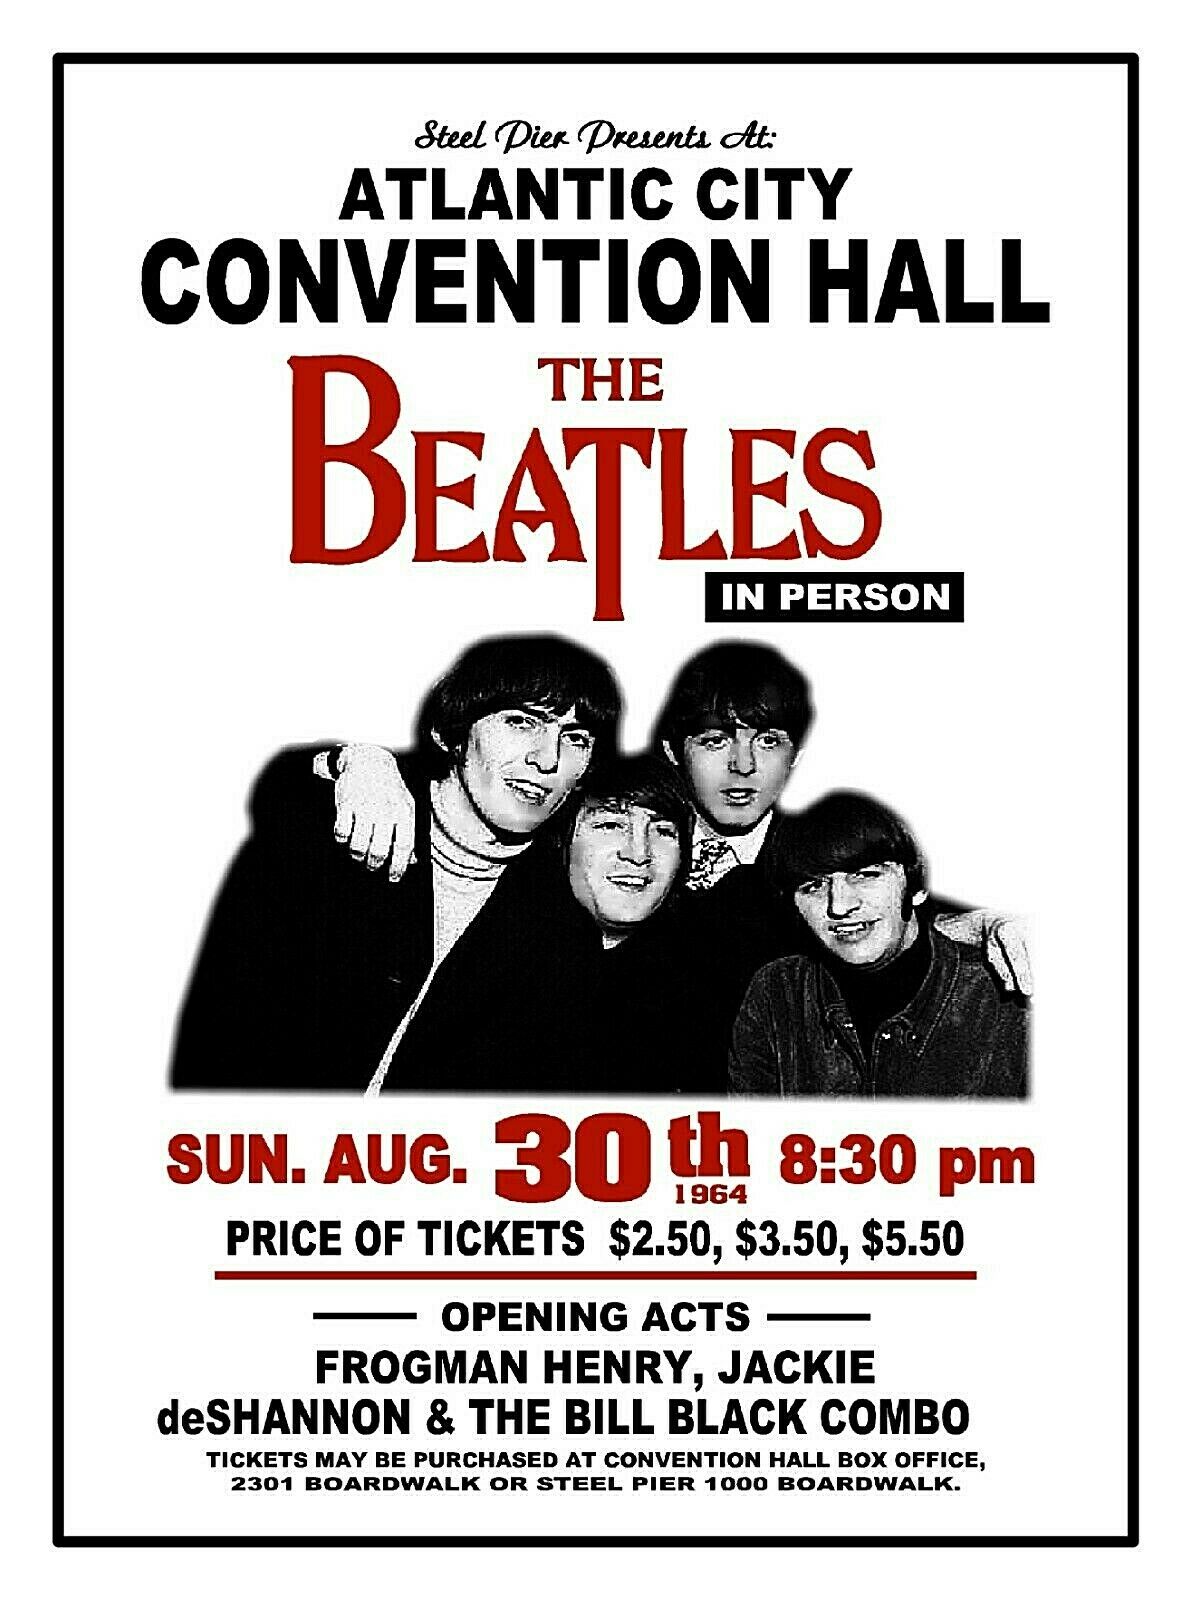 The Beatles 1964 Atlantic City Nj Convention Hall  Concert Poster Memorabilia